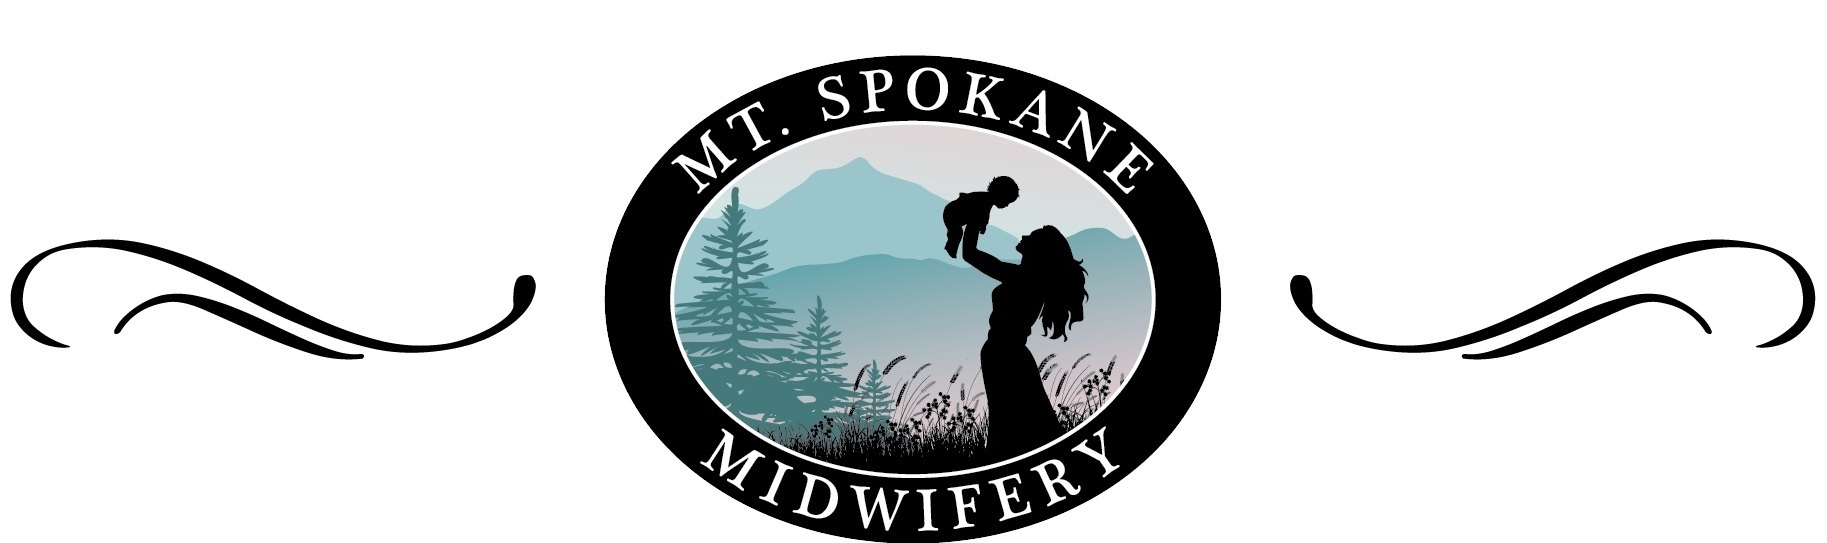 Mt. Spokane Midwifery